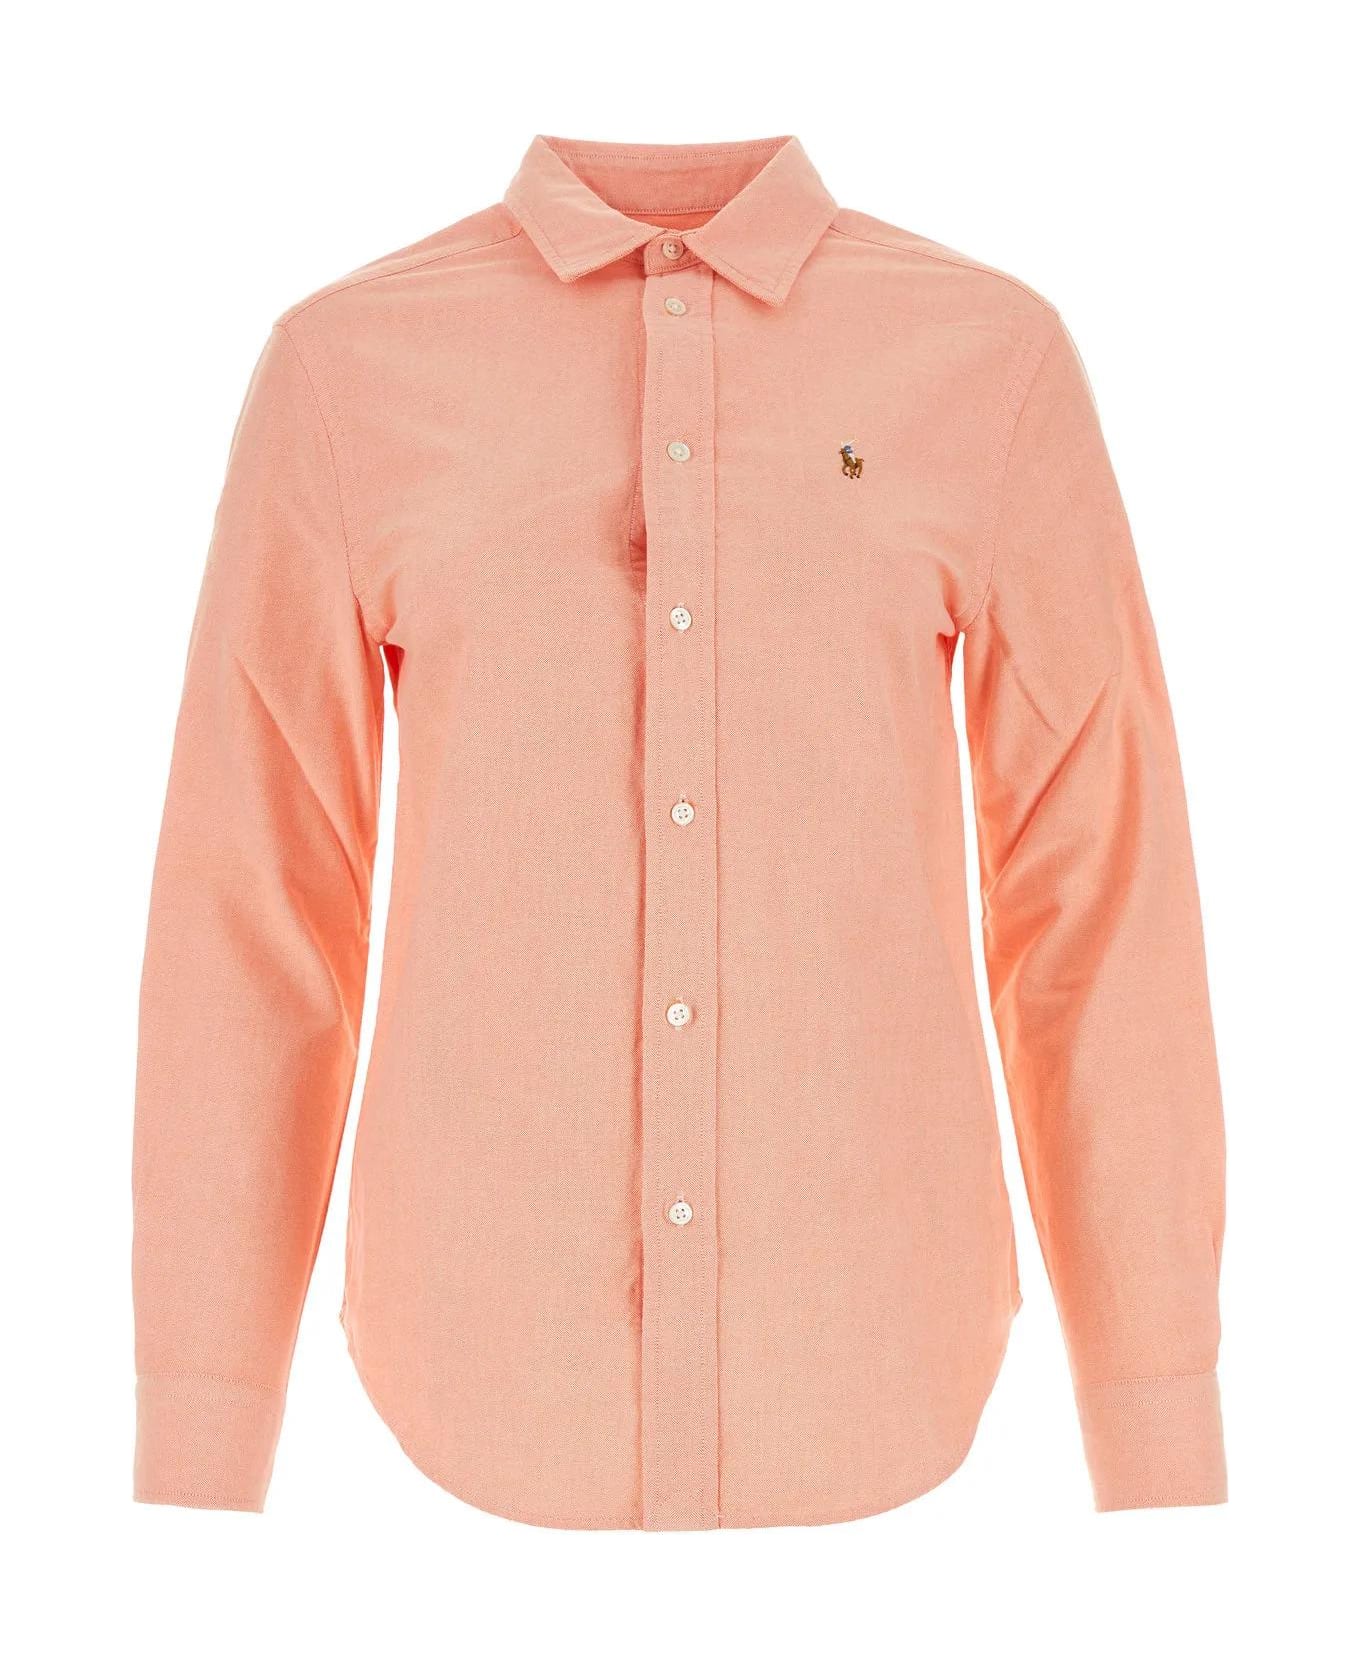 Ralph Lauren Salmon Oxford Shirt - ORANGE